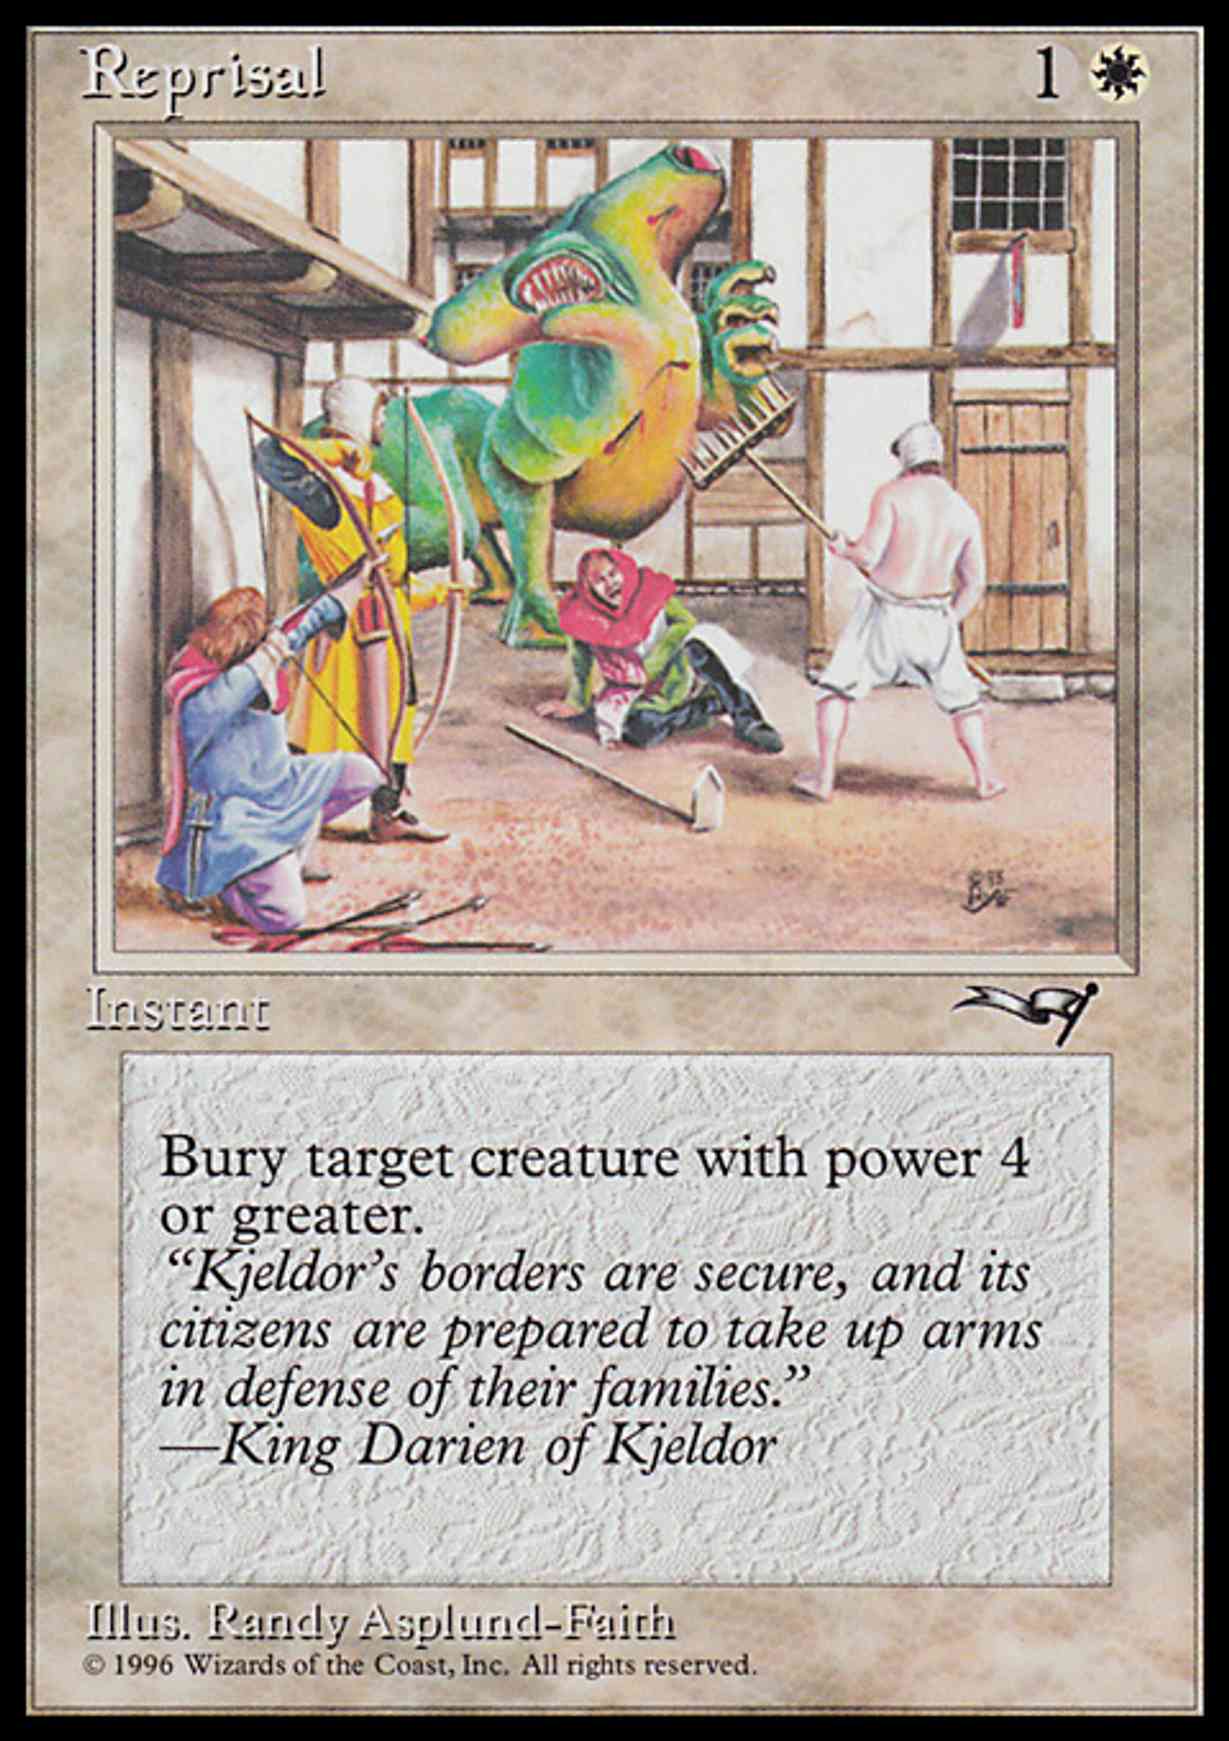 Reprisal (Green Monster) magic card front